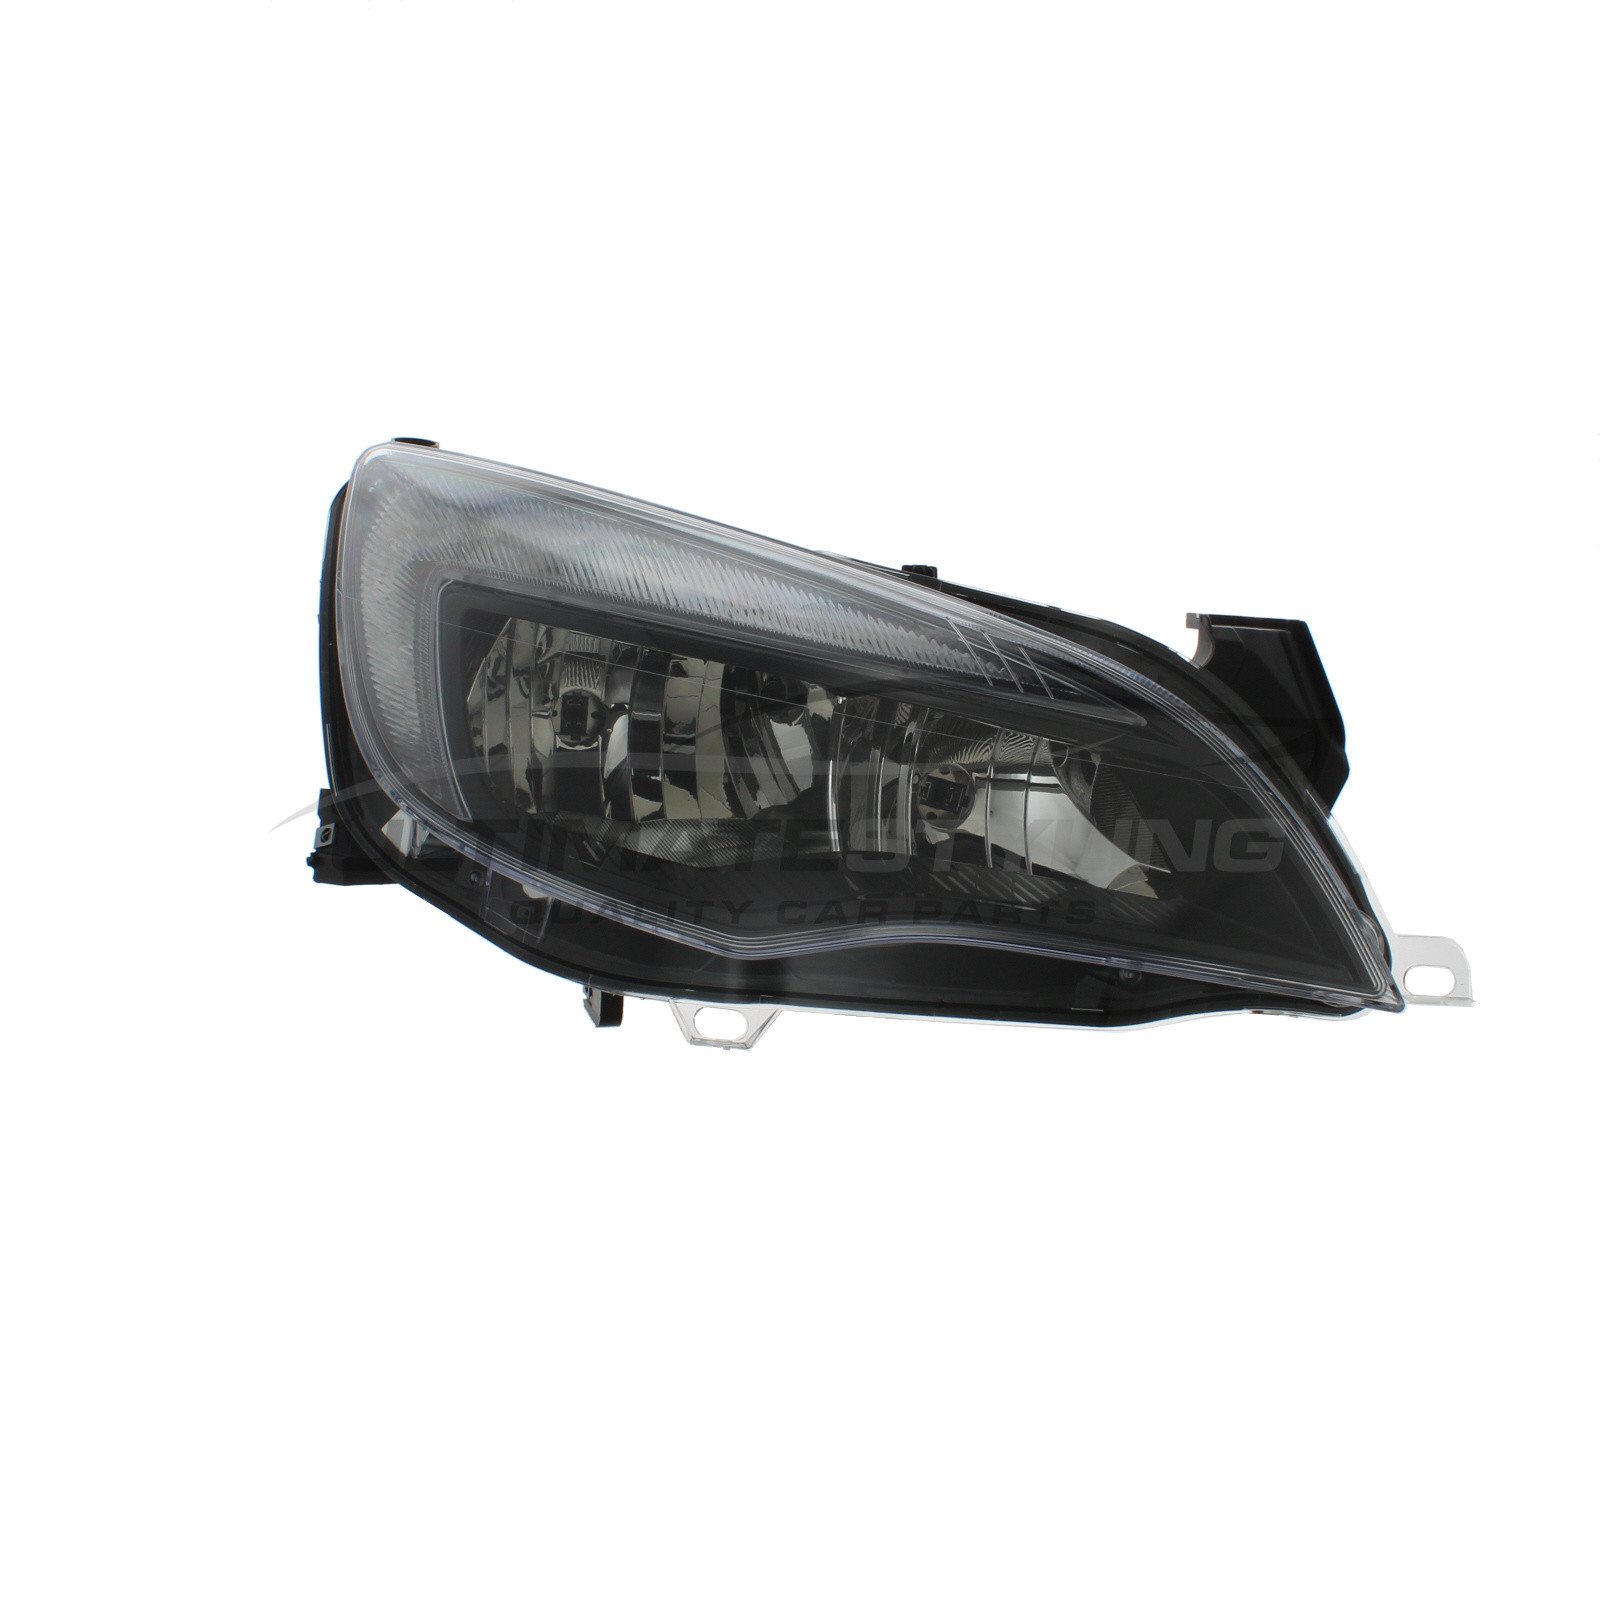 Vauxhall Astra Headlight / Headlamp - Drivers Side (RH) - Halogen